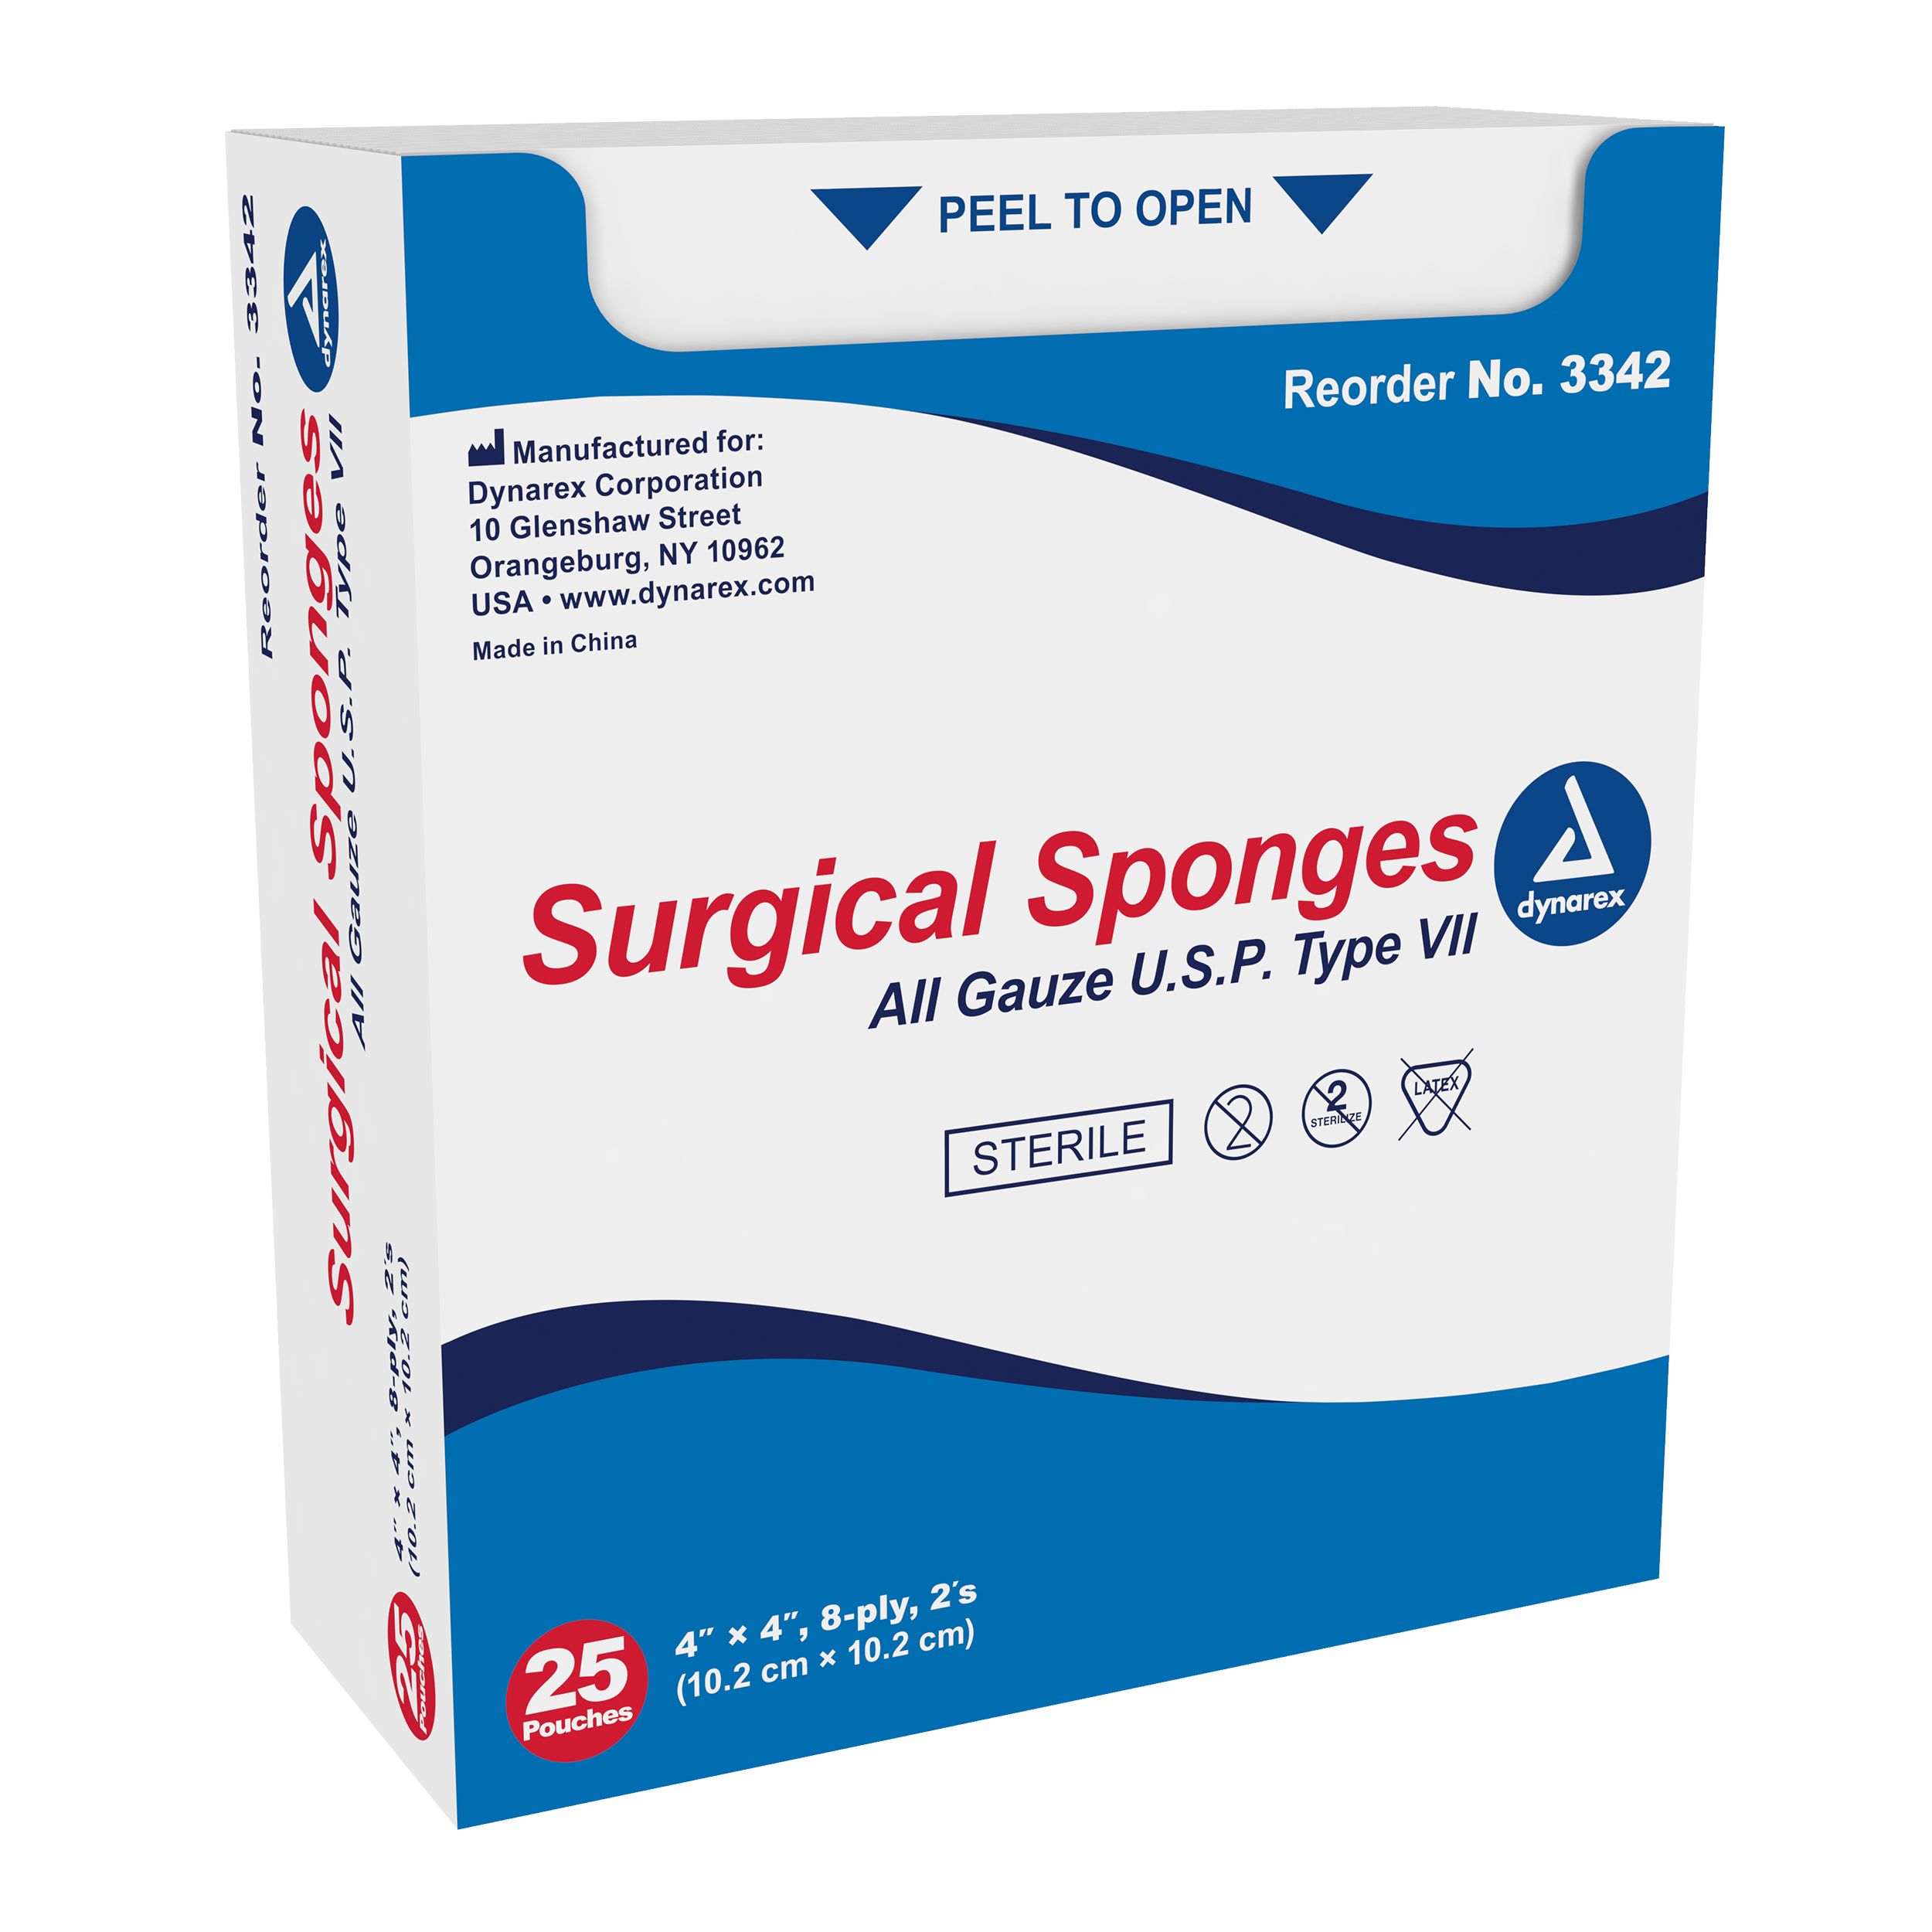 Surgical Gauze Sponge Sterile 2%27s 4